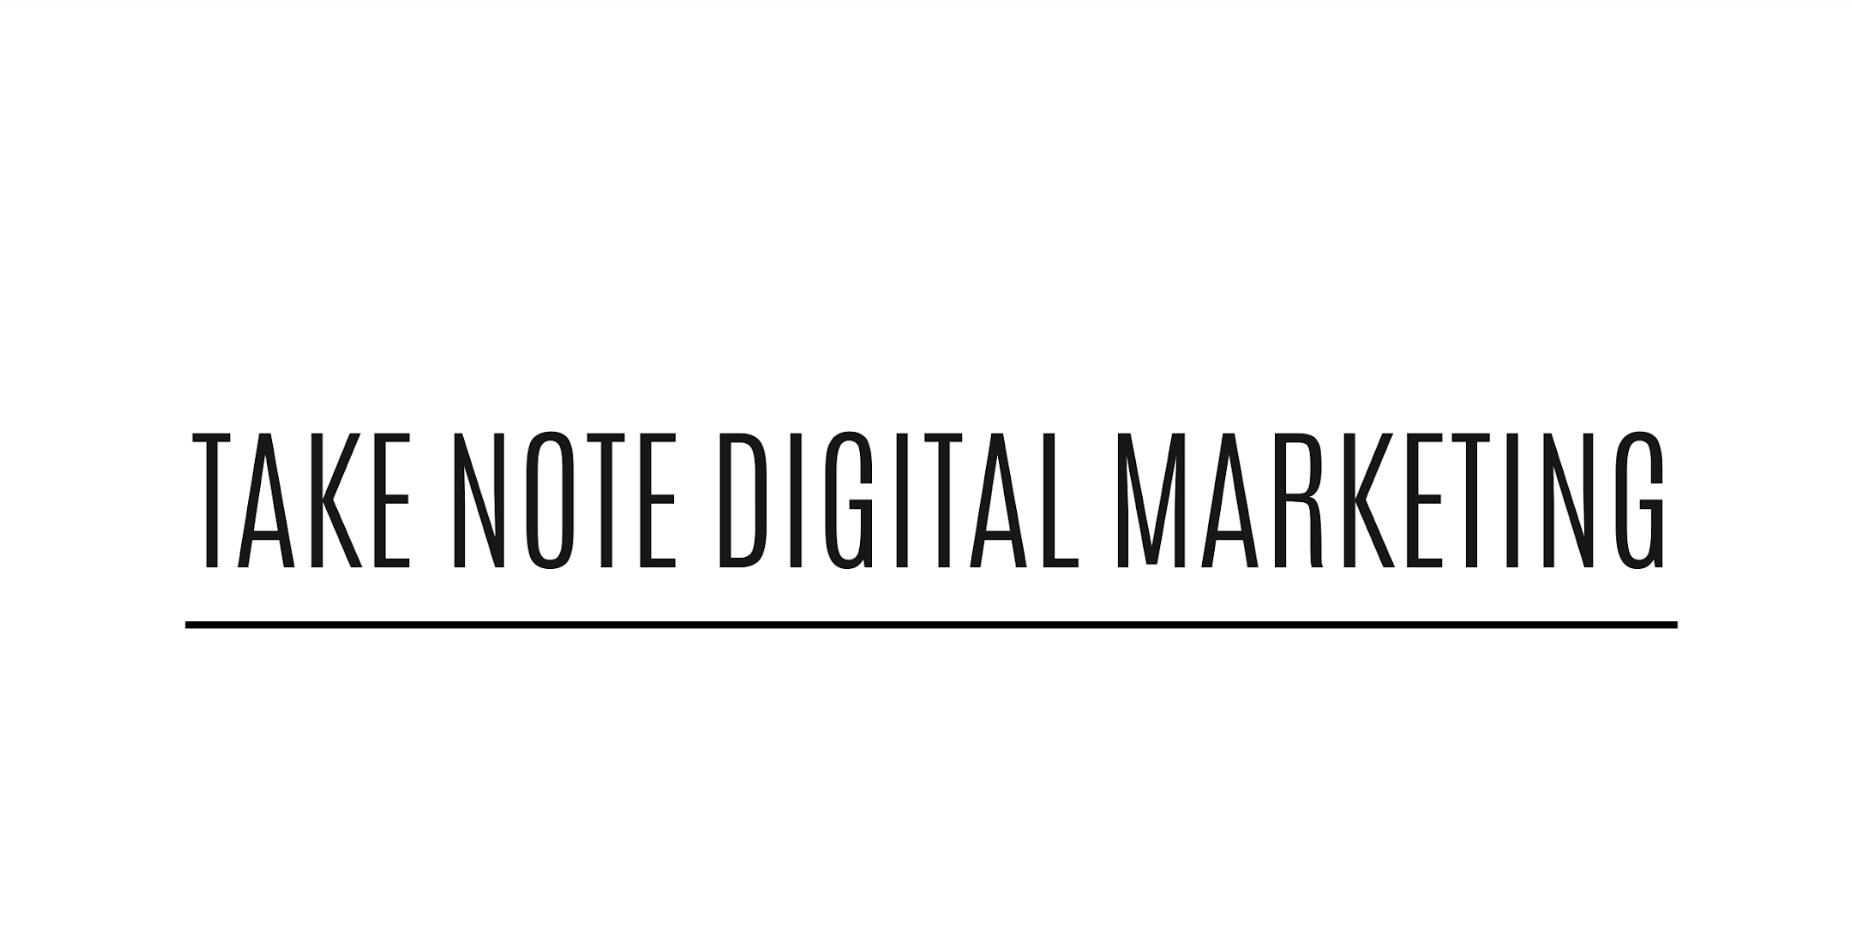 Take Note Digital Marketing Title